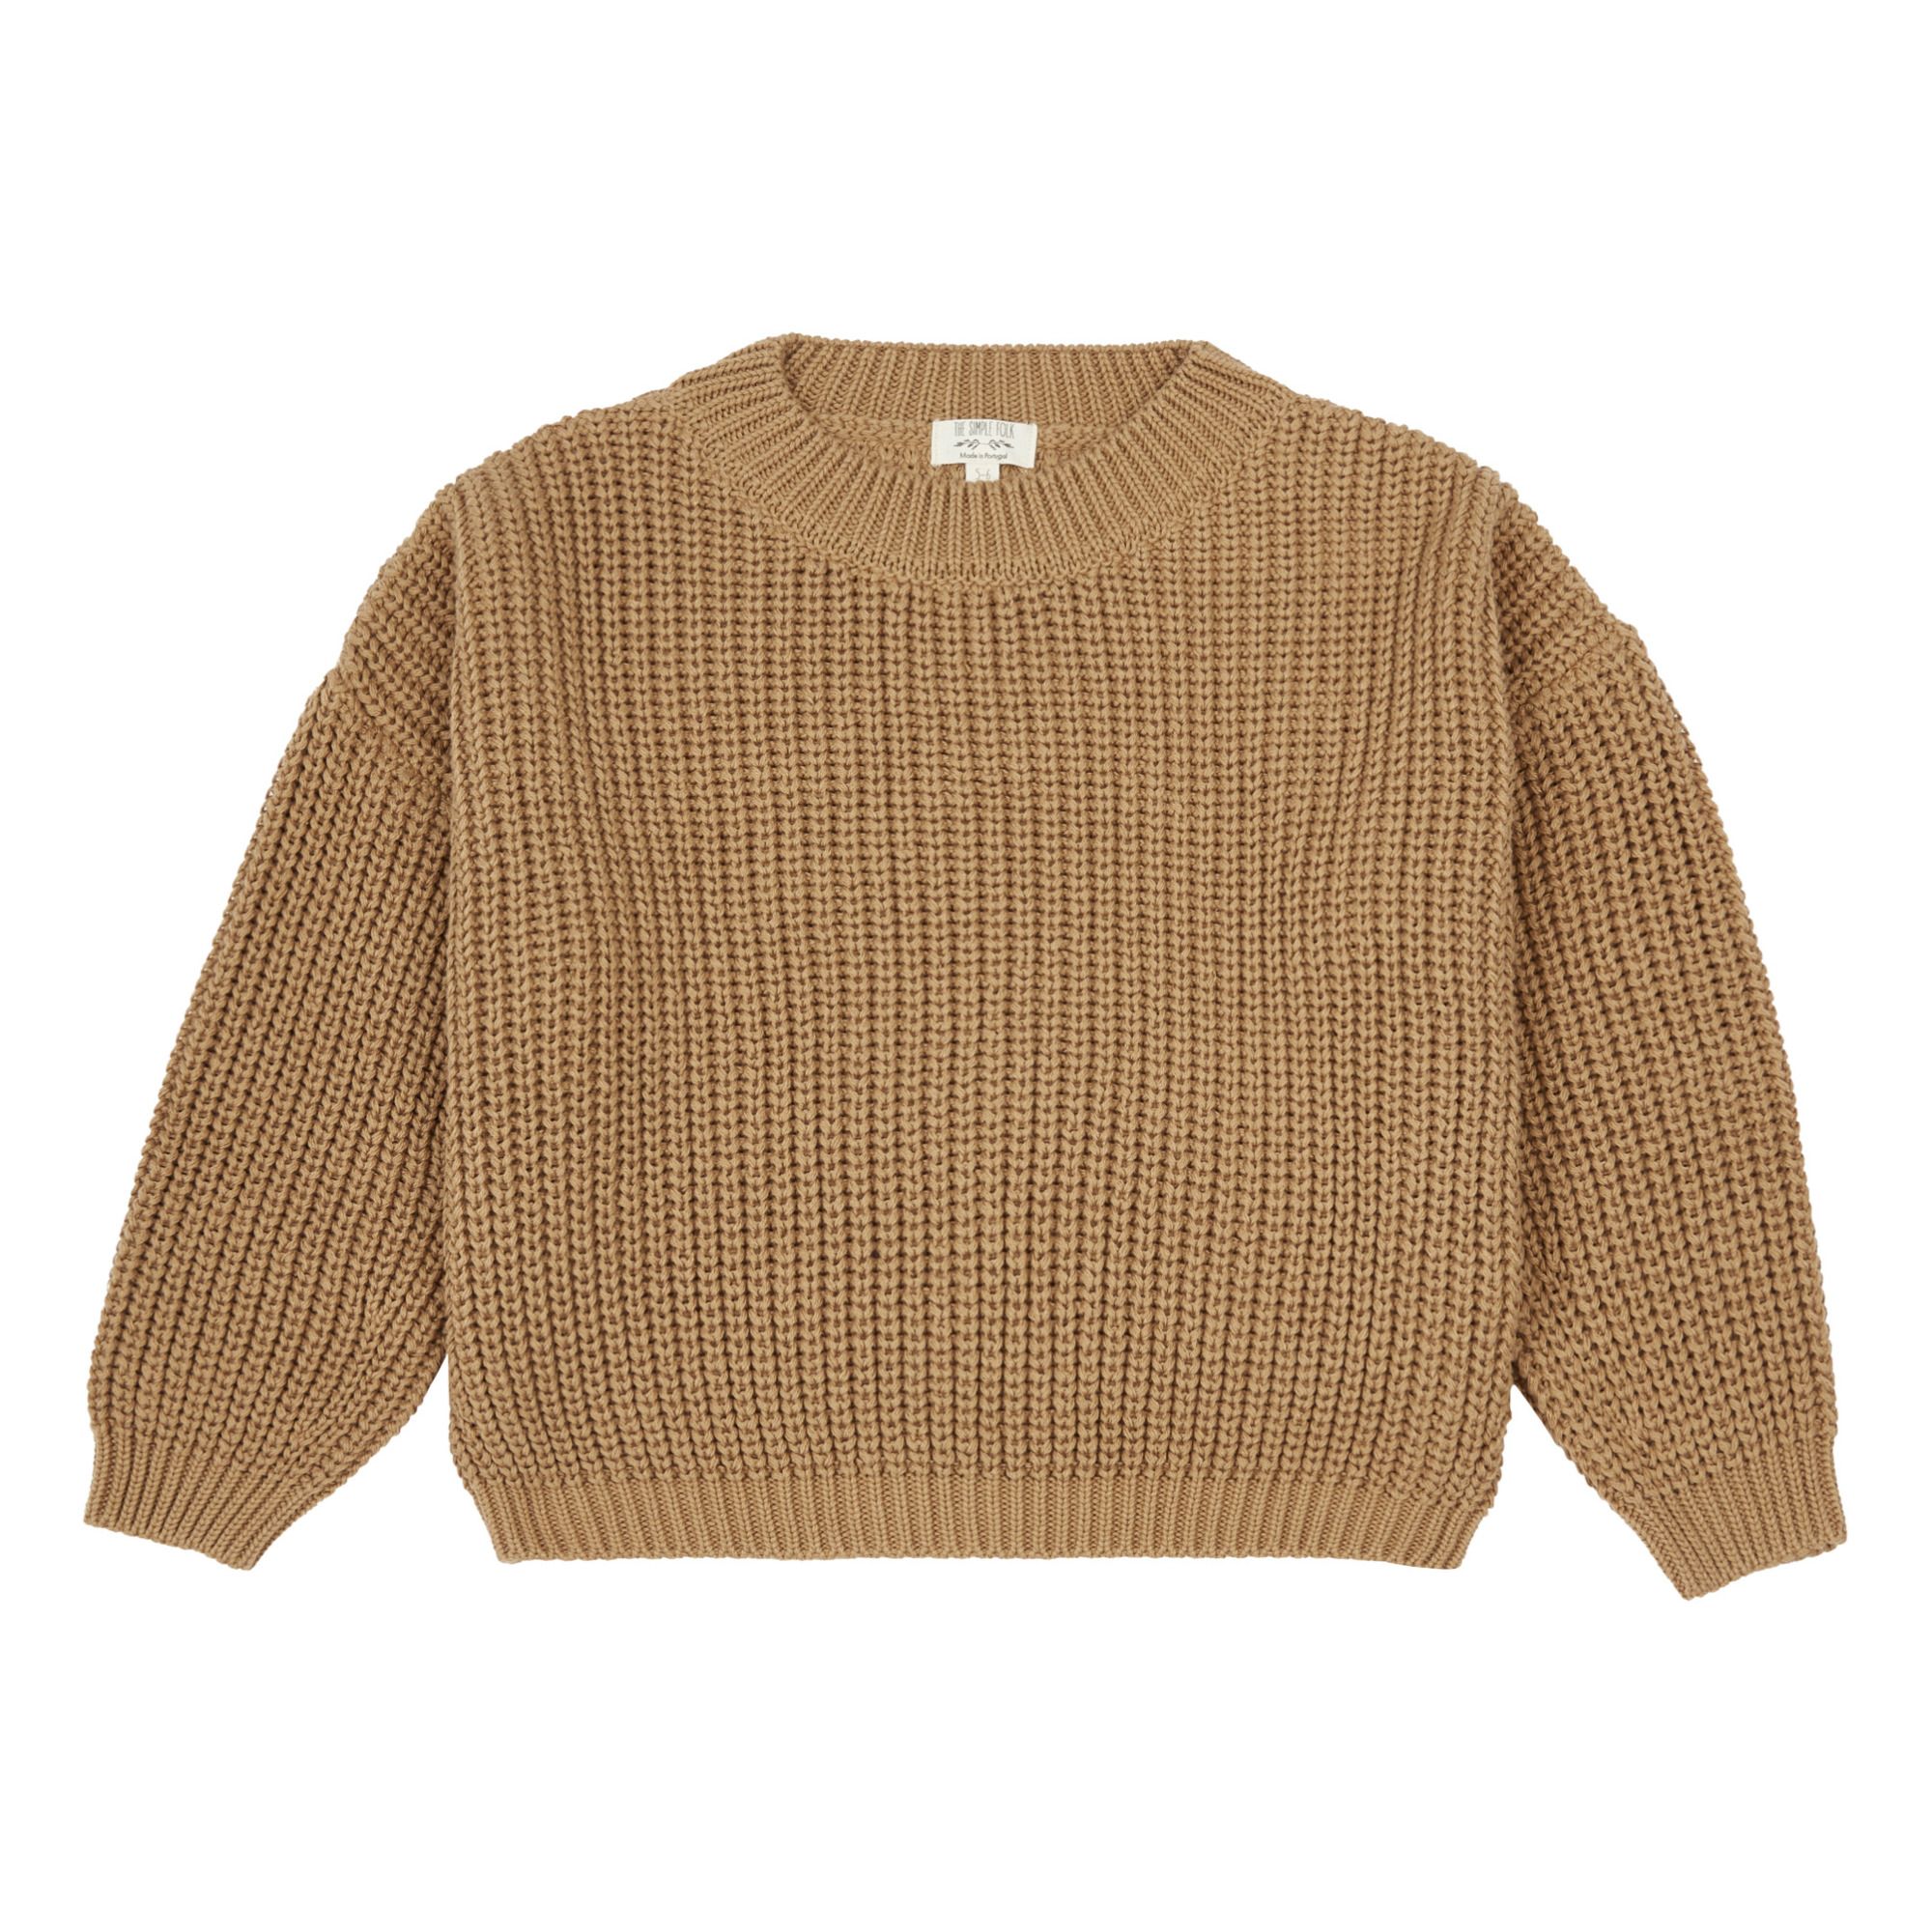 The Simple Knitted | Sweatshirt Folk Smallable Cotton - Caramel - Organic